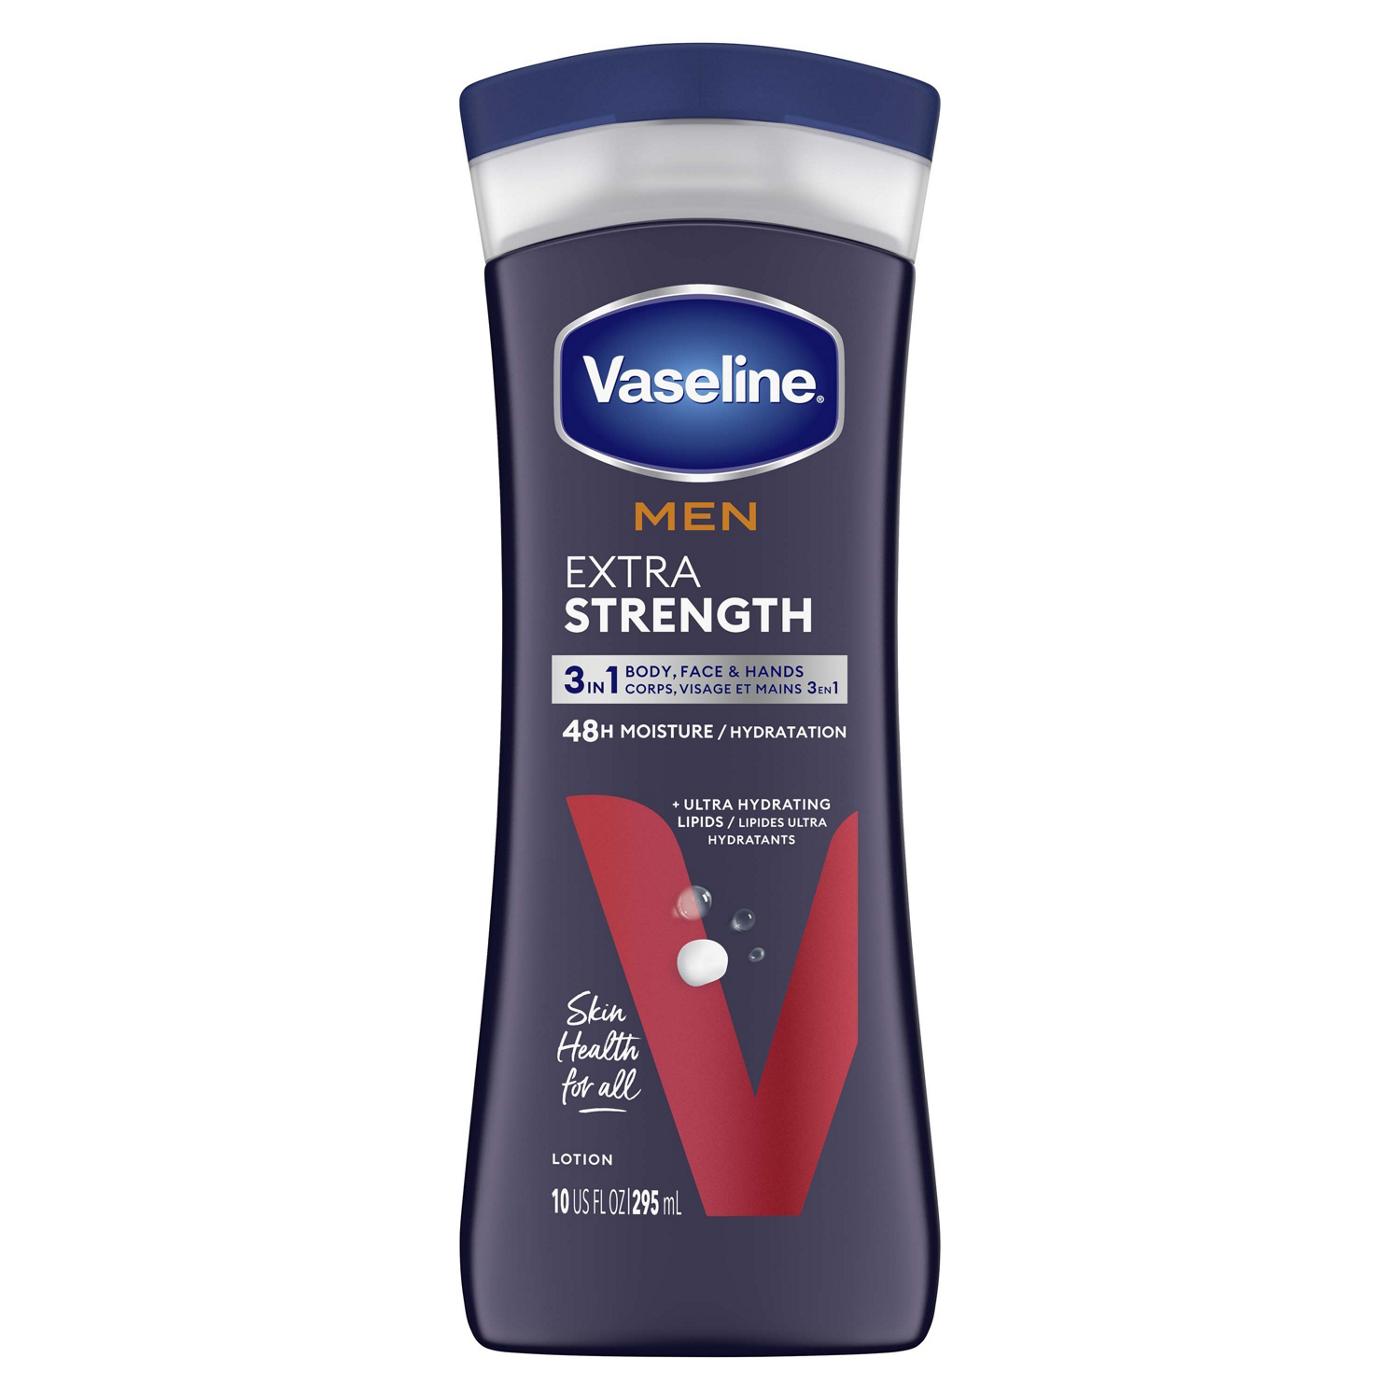 Vaseline Men Extra Strength Lotion; image 1 of 5